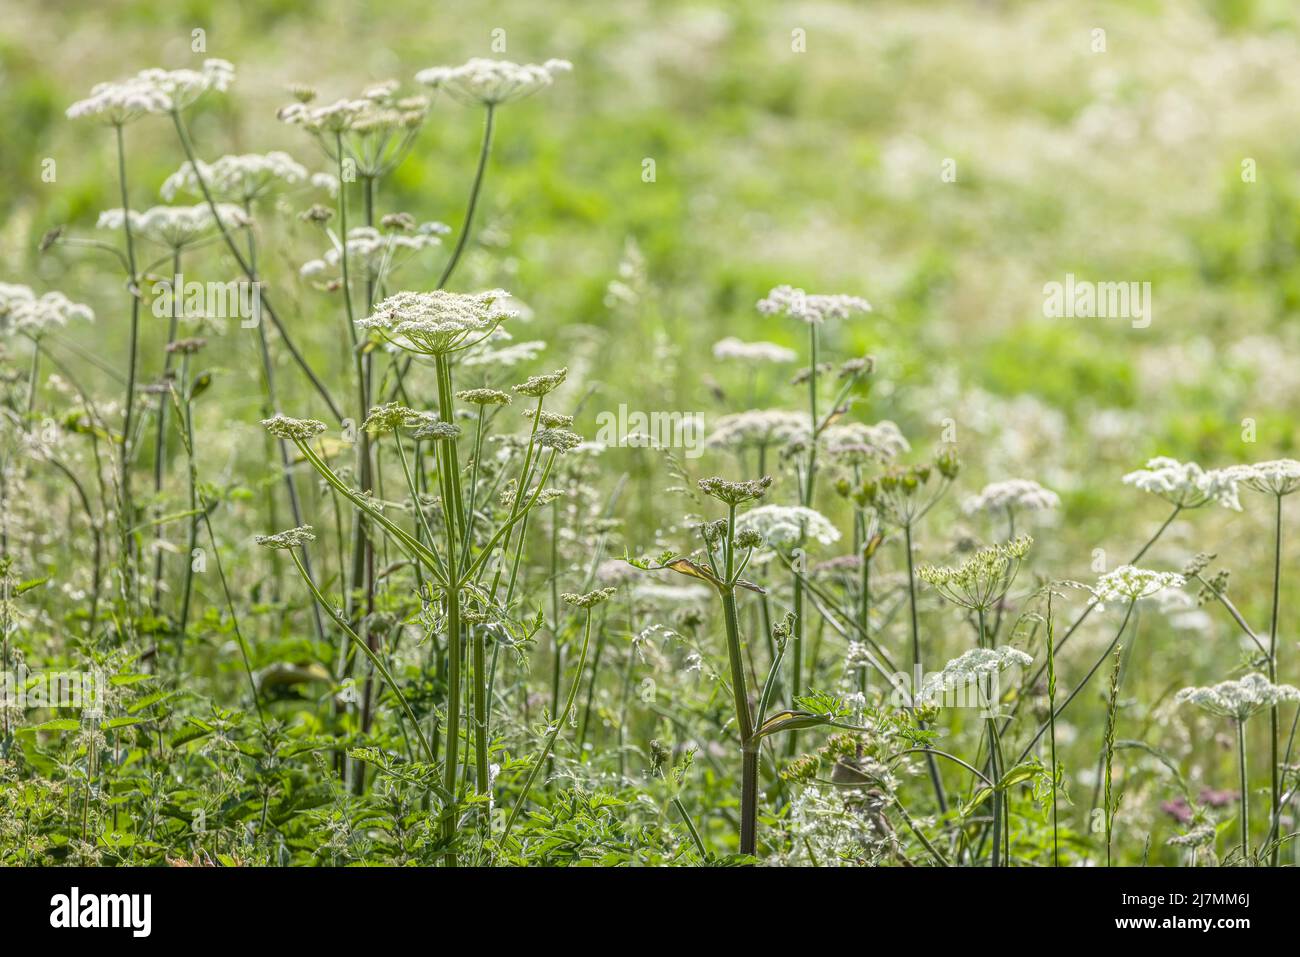 Wild flower meadow, cow parsley growing in a field of flowers, UK Stock Photo